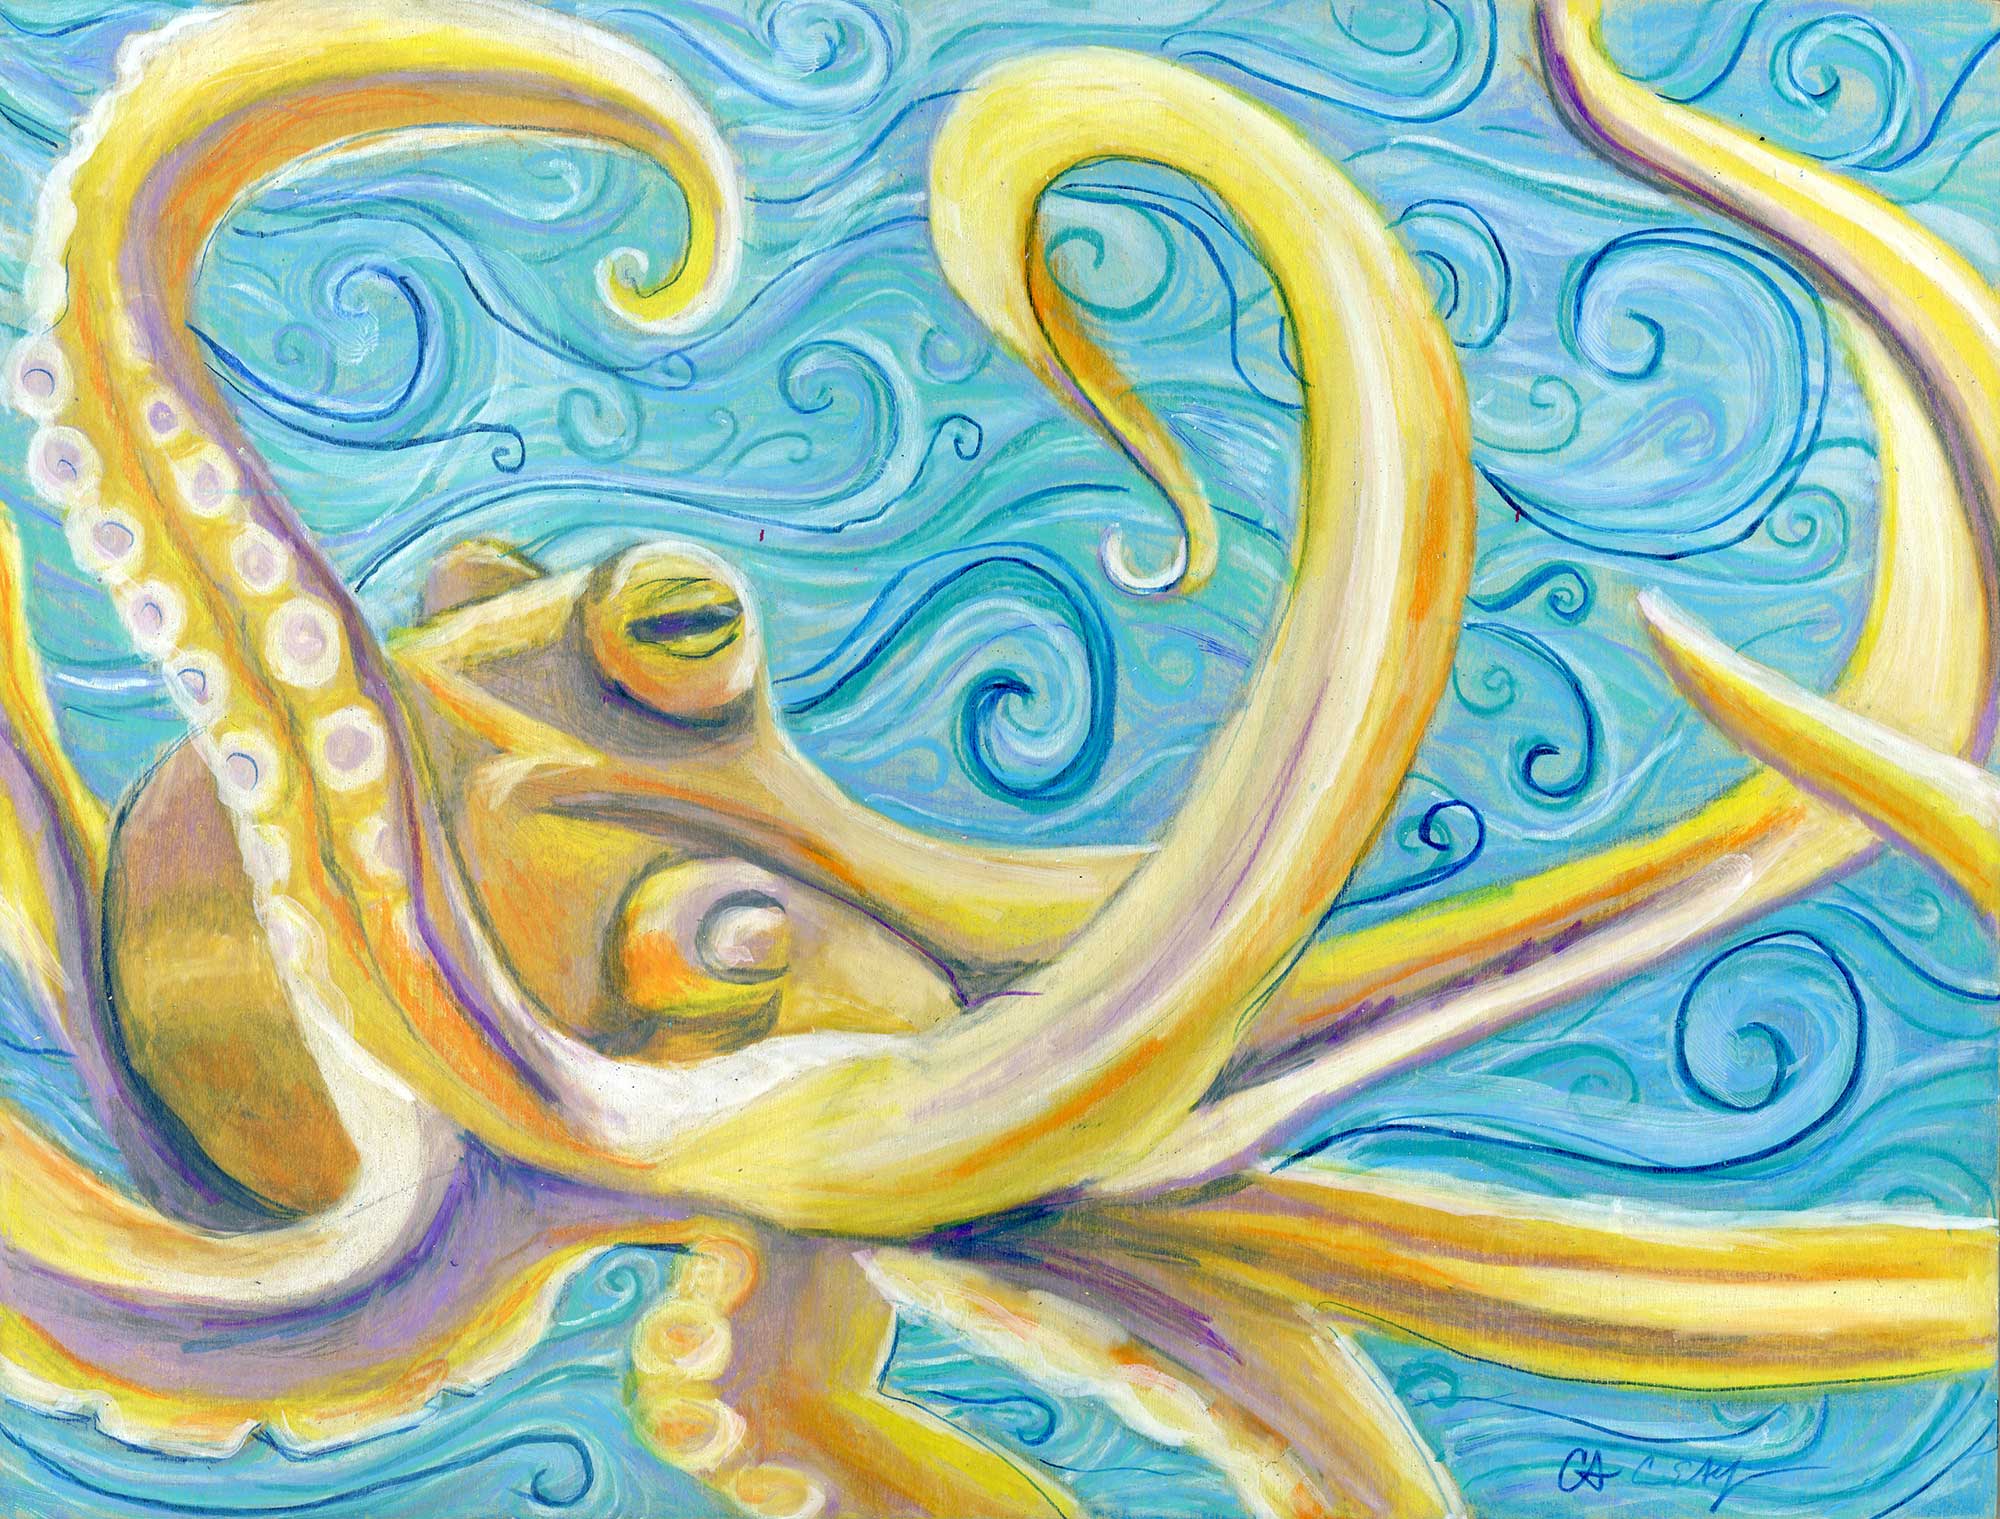 SOLD - "Yellow Octopus", 9" x 12", mixed media